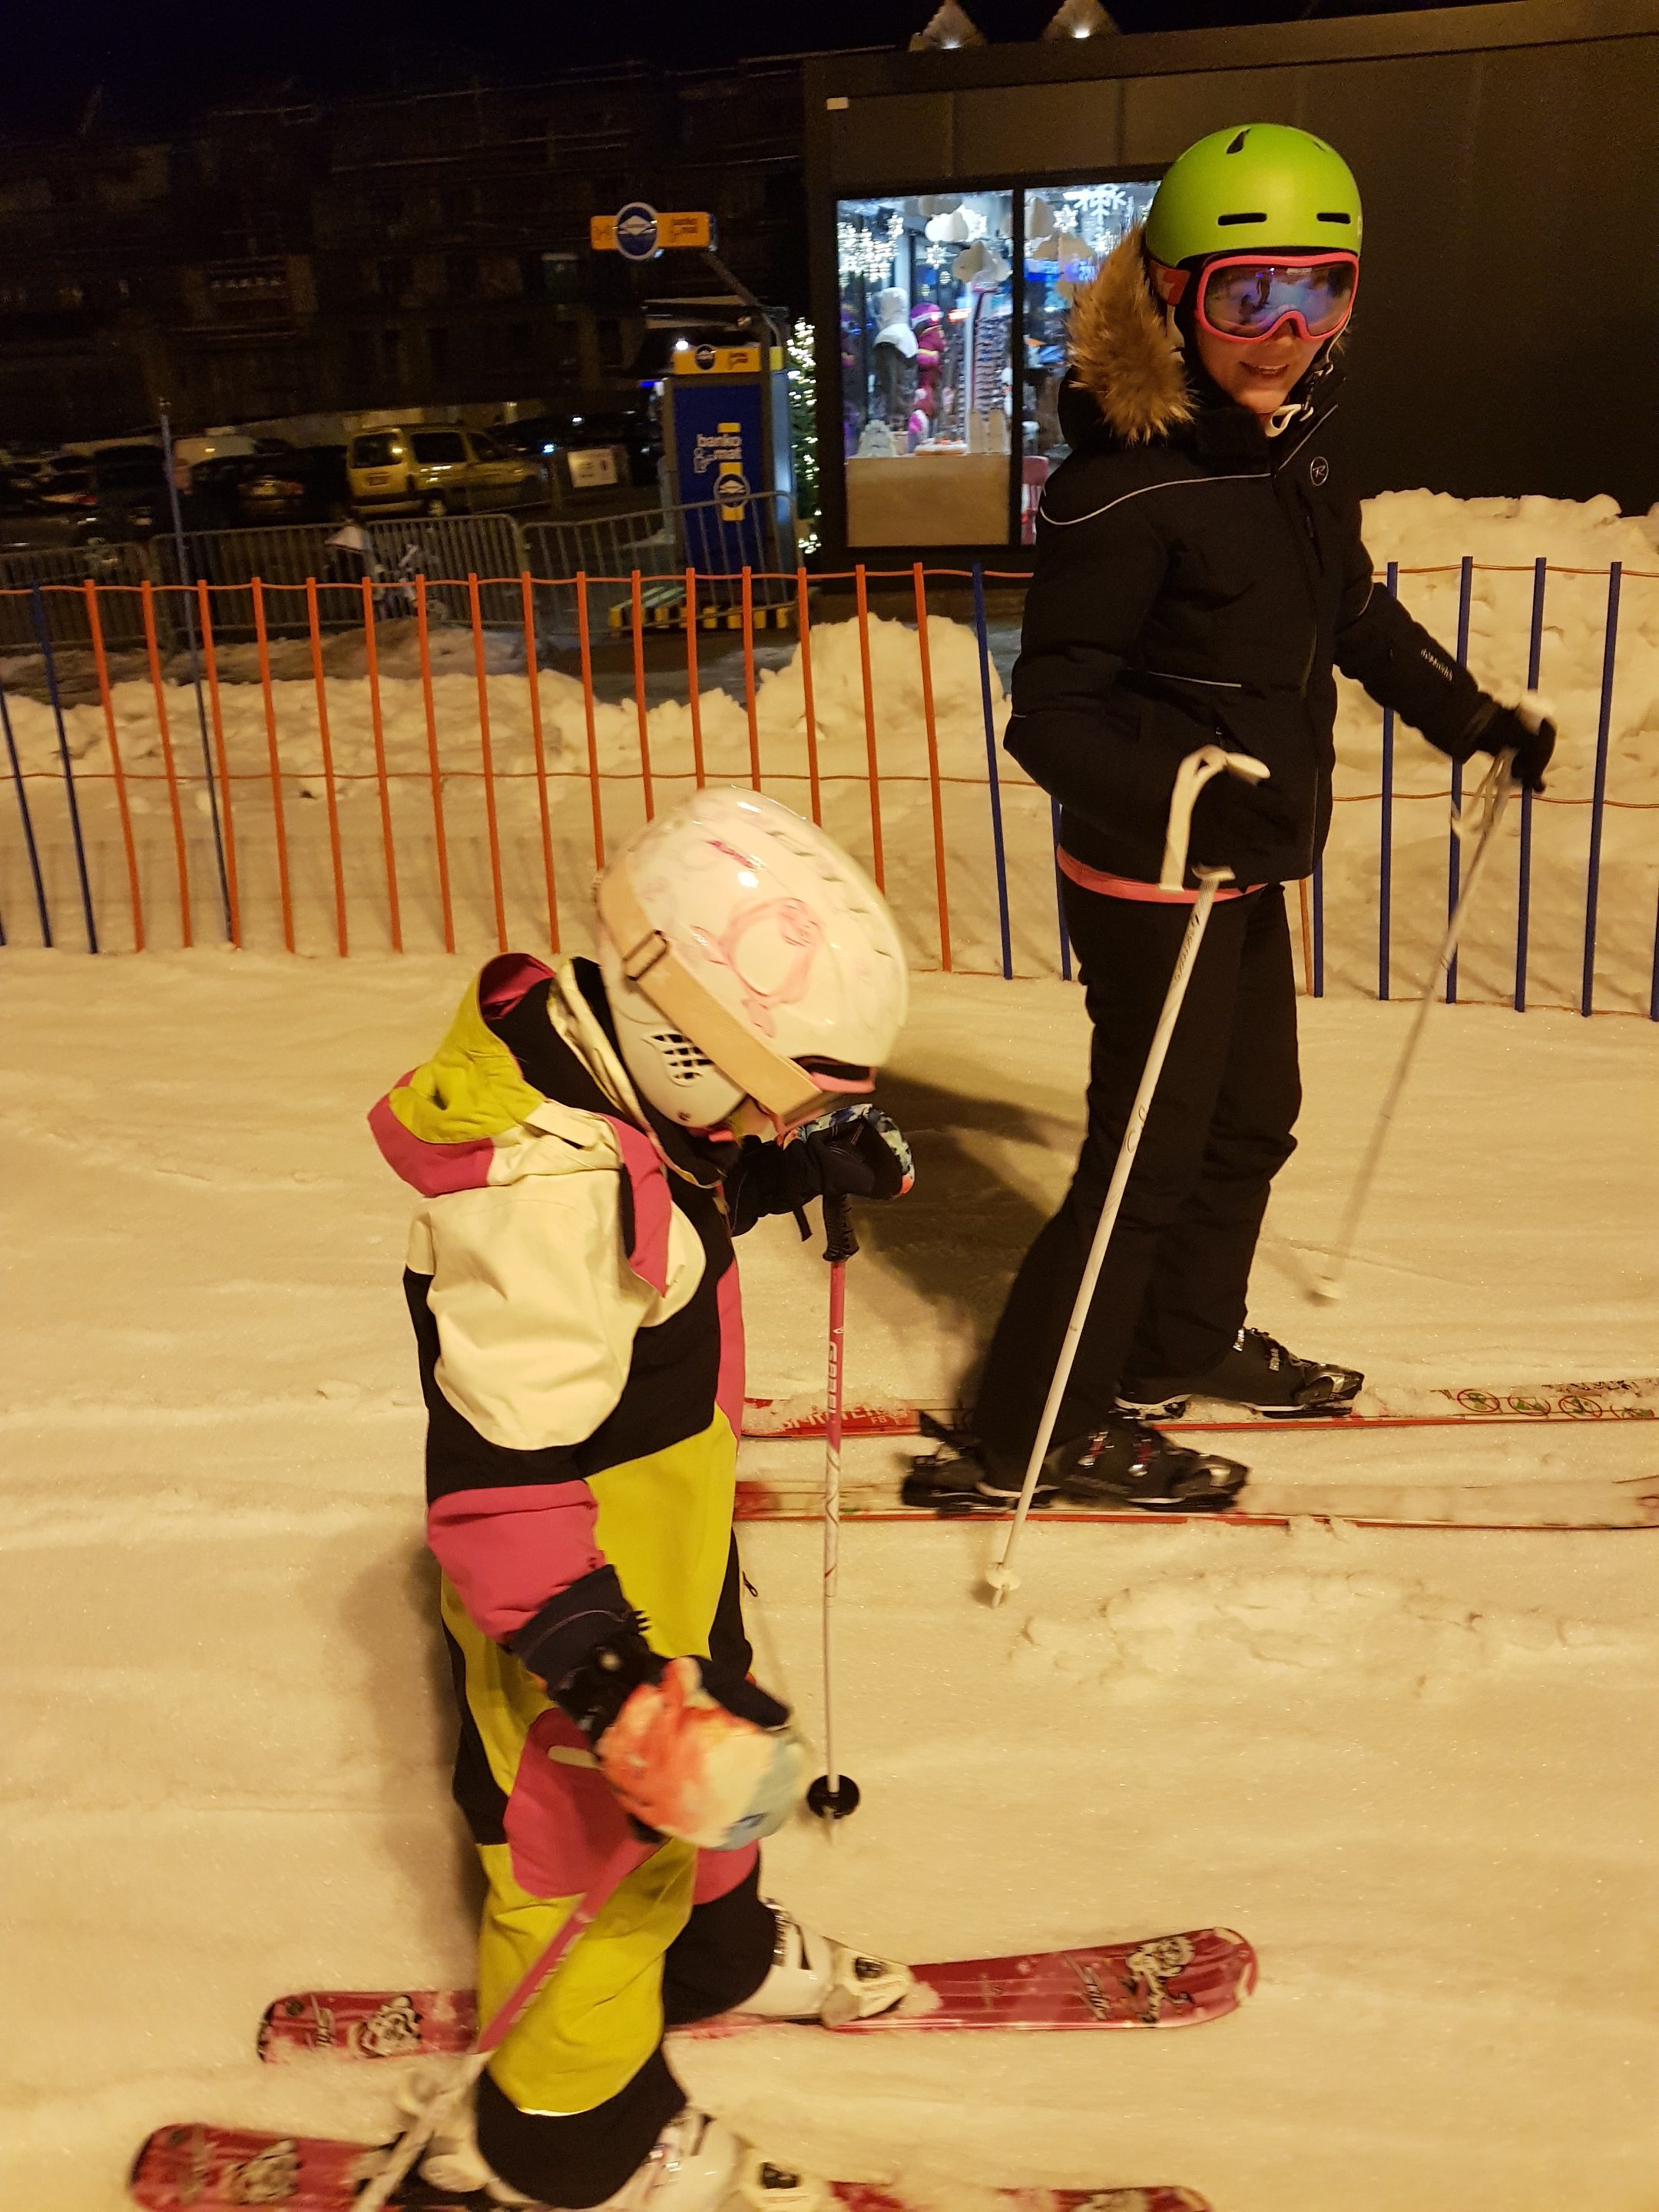 Family skiing in Bialka Tatrzanska Poland